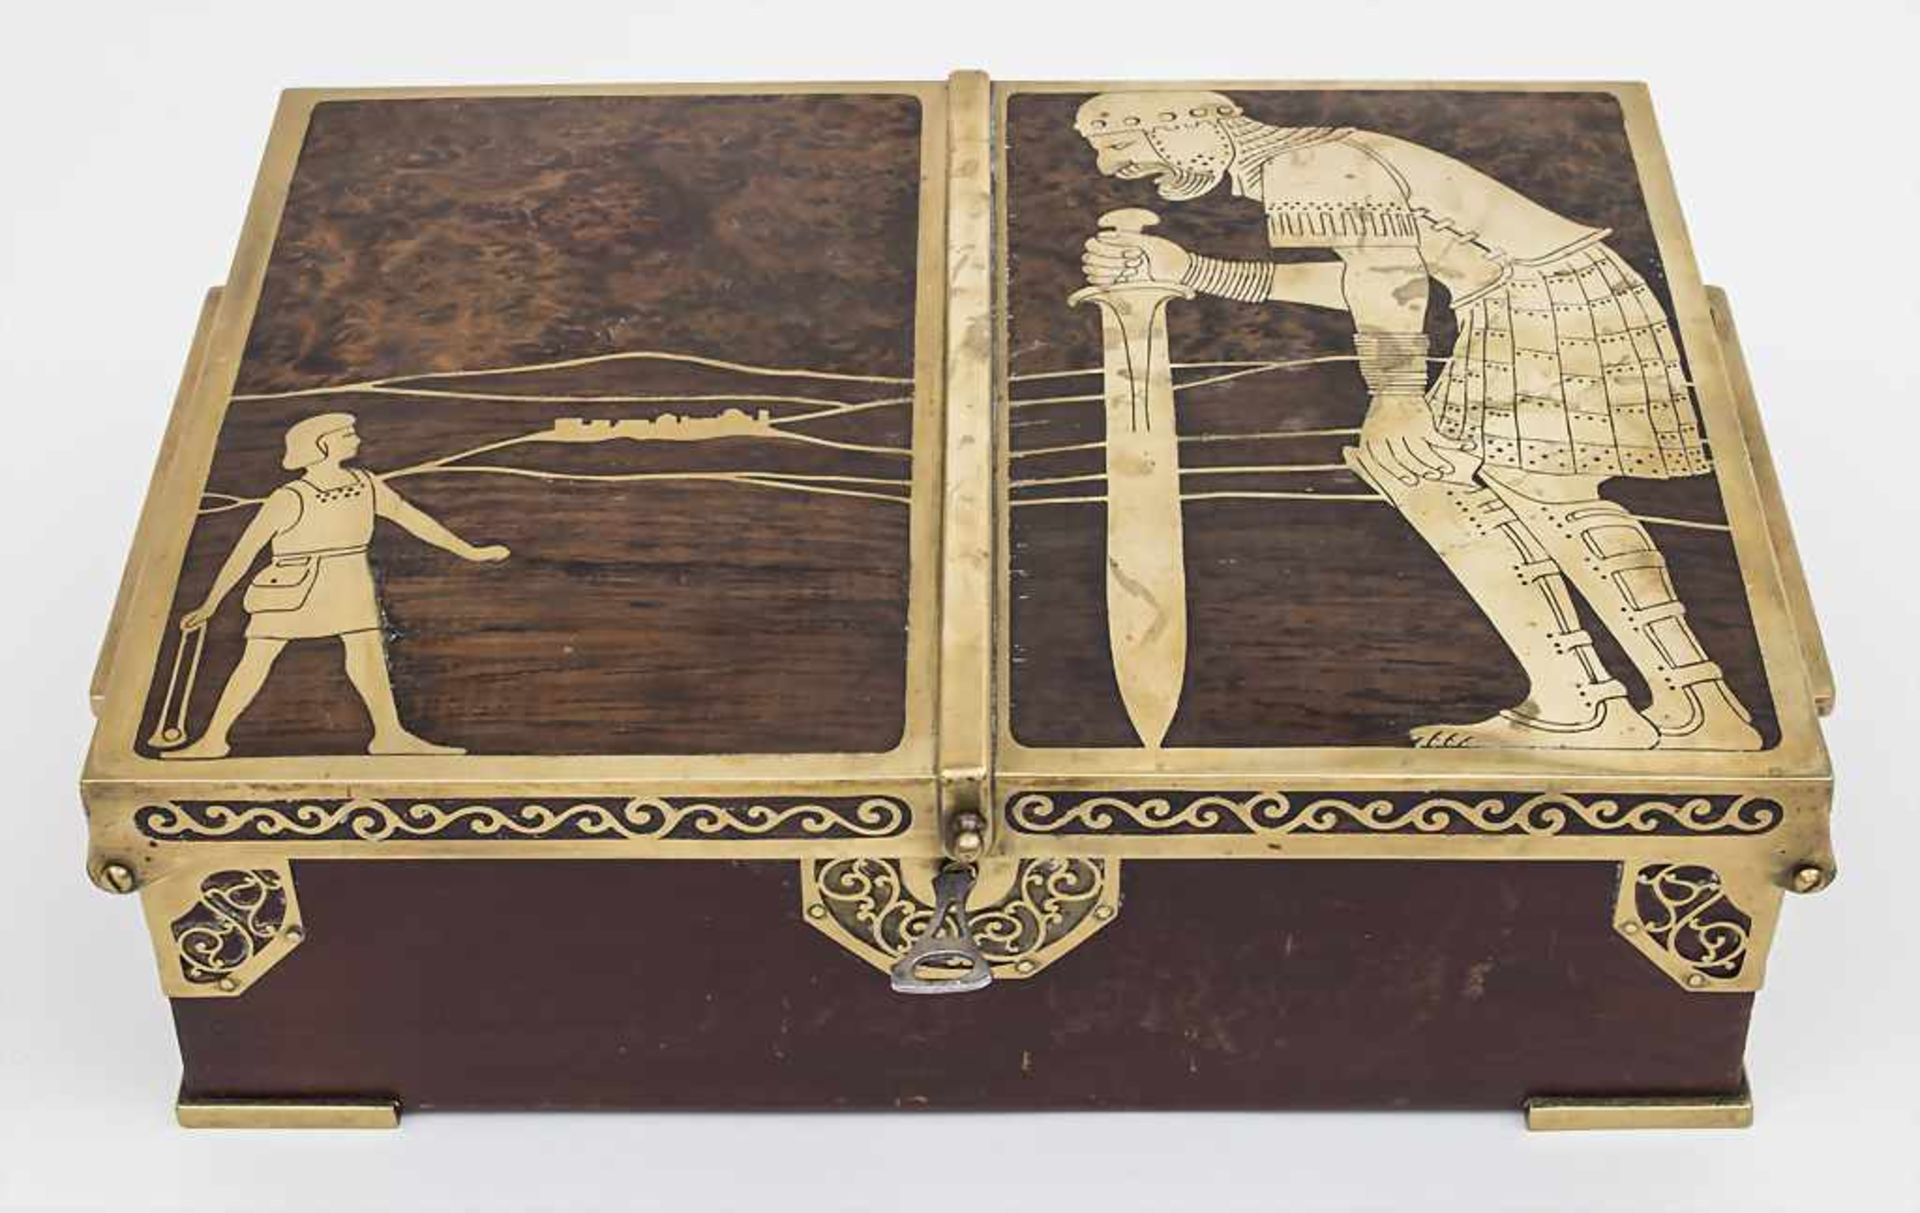 Schatulle 'David & Goliath' / A casket 'David & Goliath', Erhard & Söhne, um 1910 Material: Holz mit